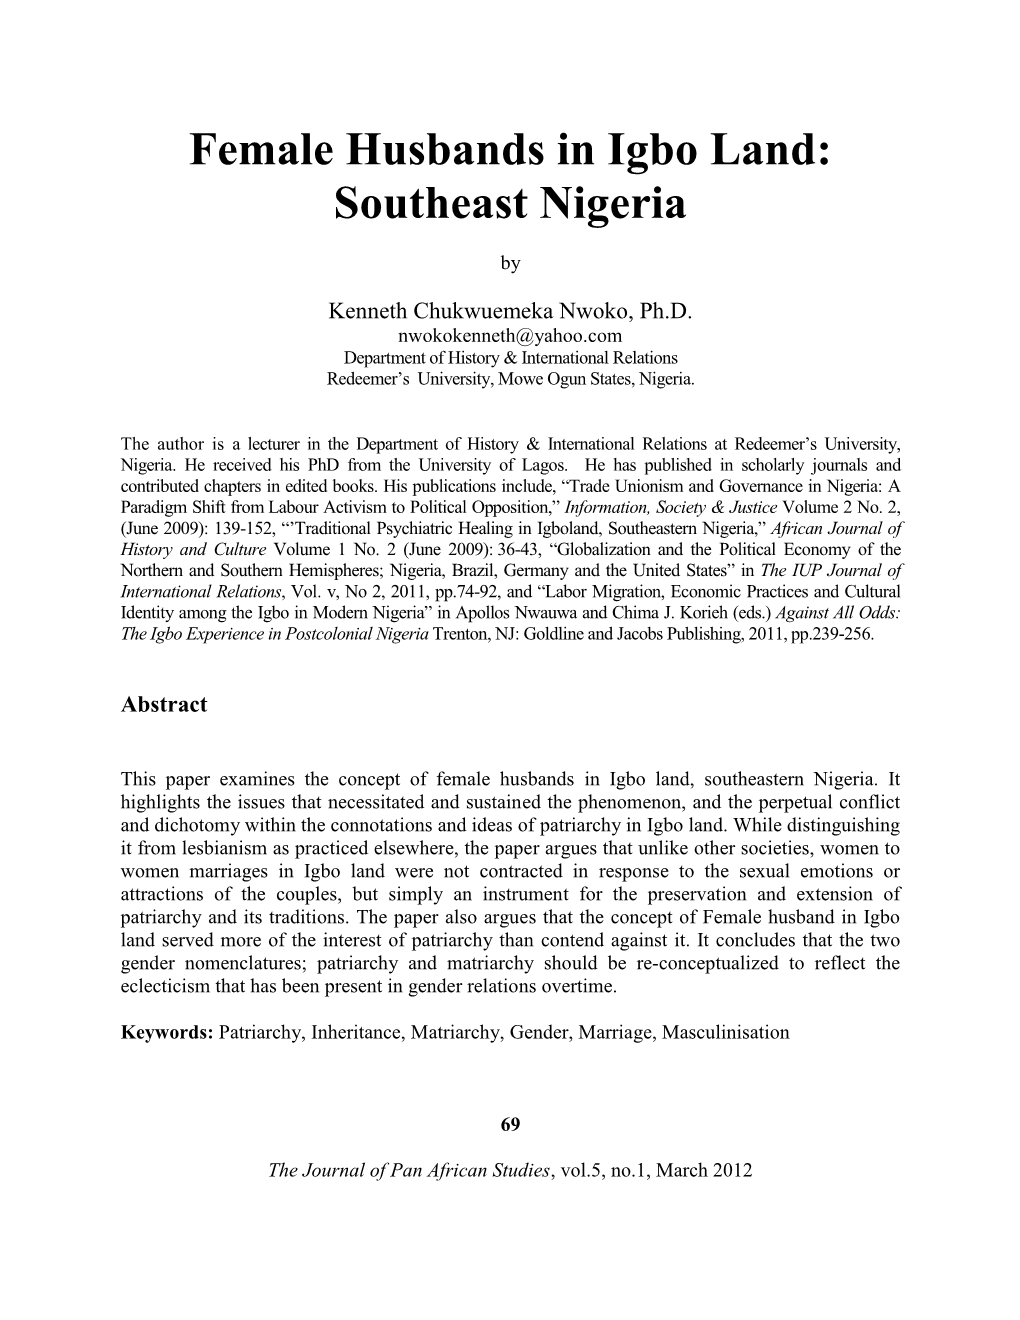 Female Husbands in Igbo Land: Southeast Nigeria